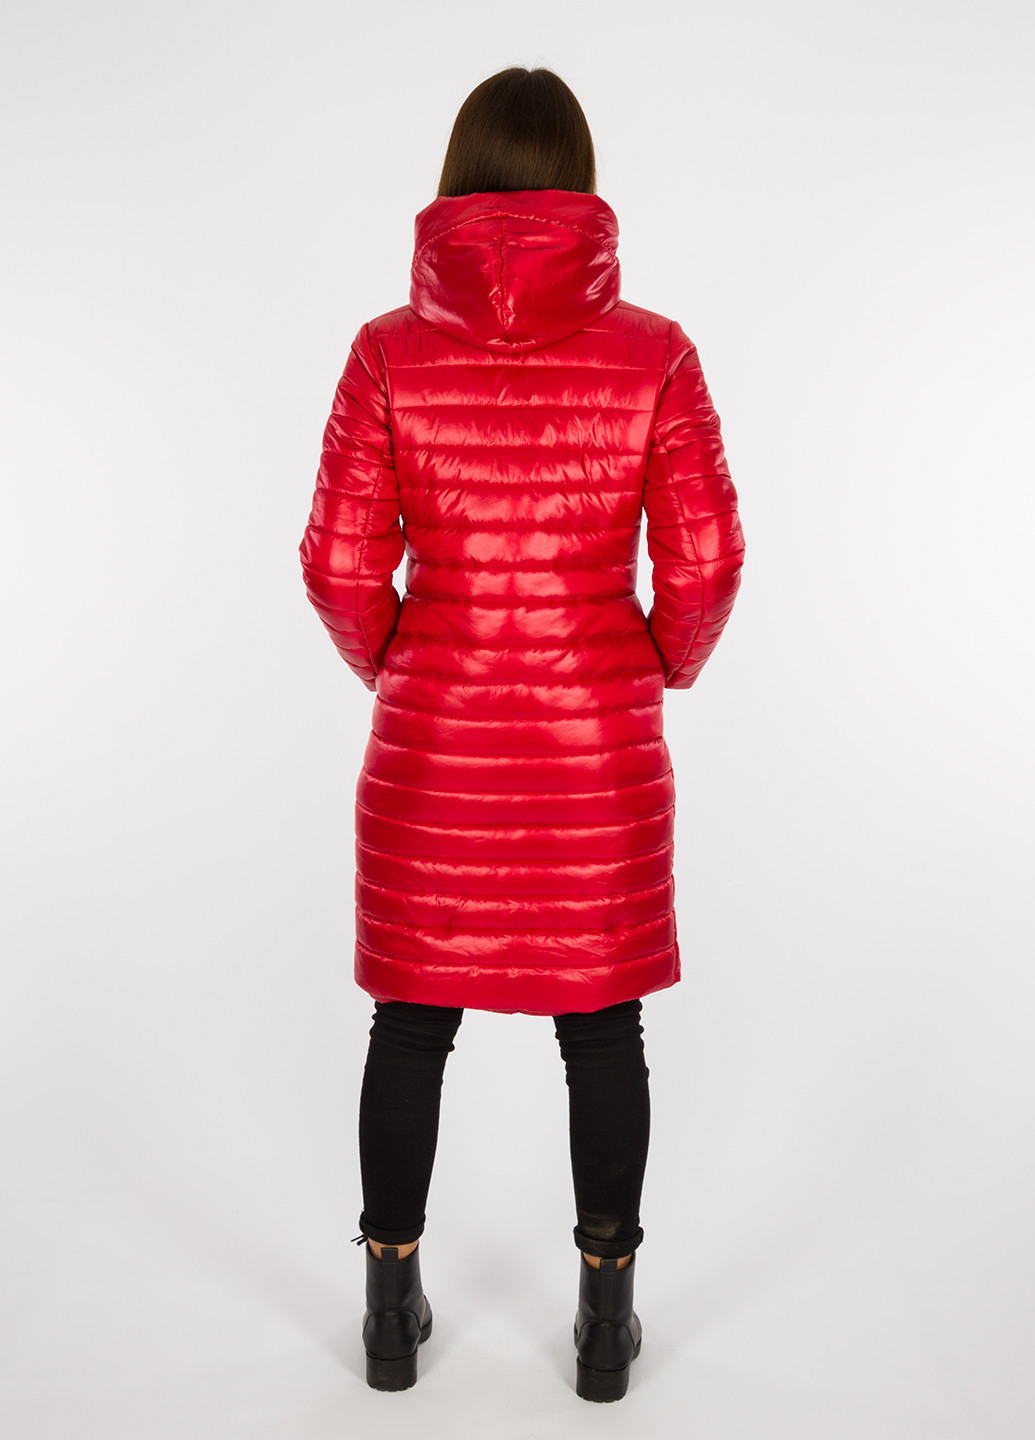 Красная зимняя куртка-пуховик Westland